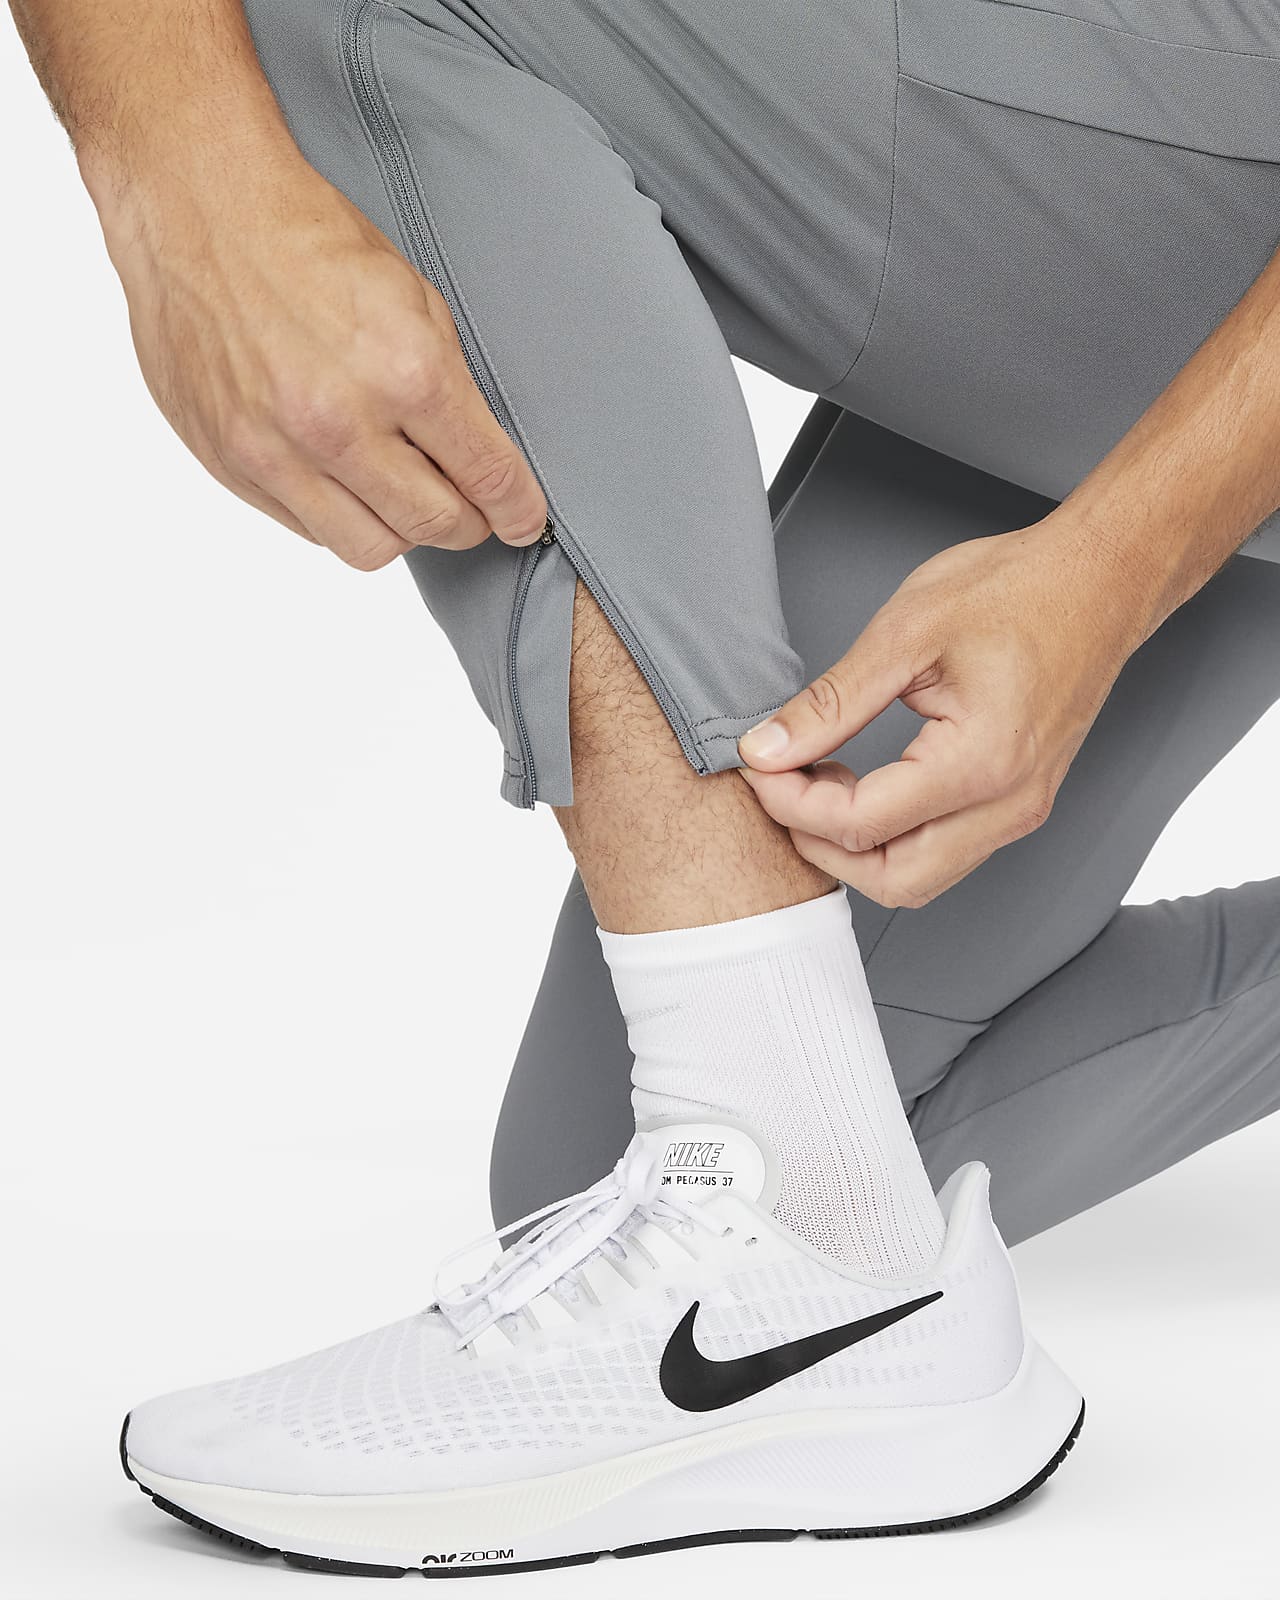 Nike Dri-Fit Challenger Woven Running Erkek Eşofman Altı DD4894